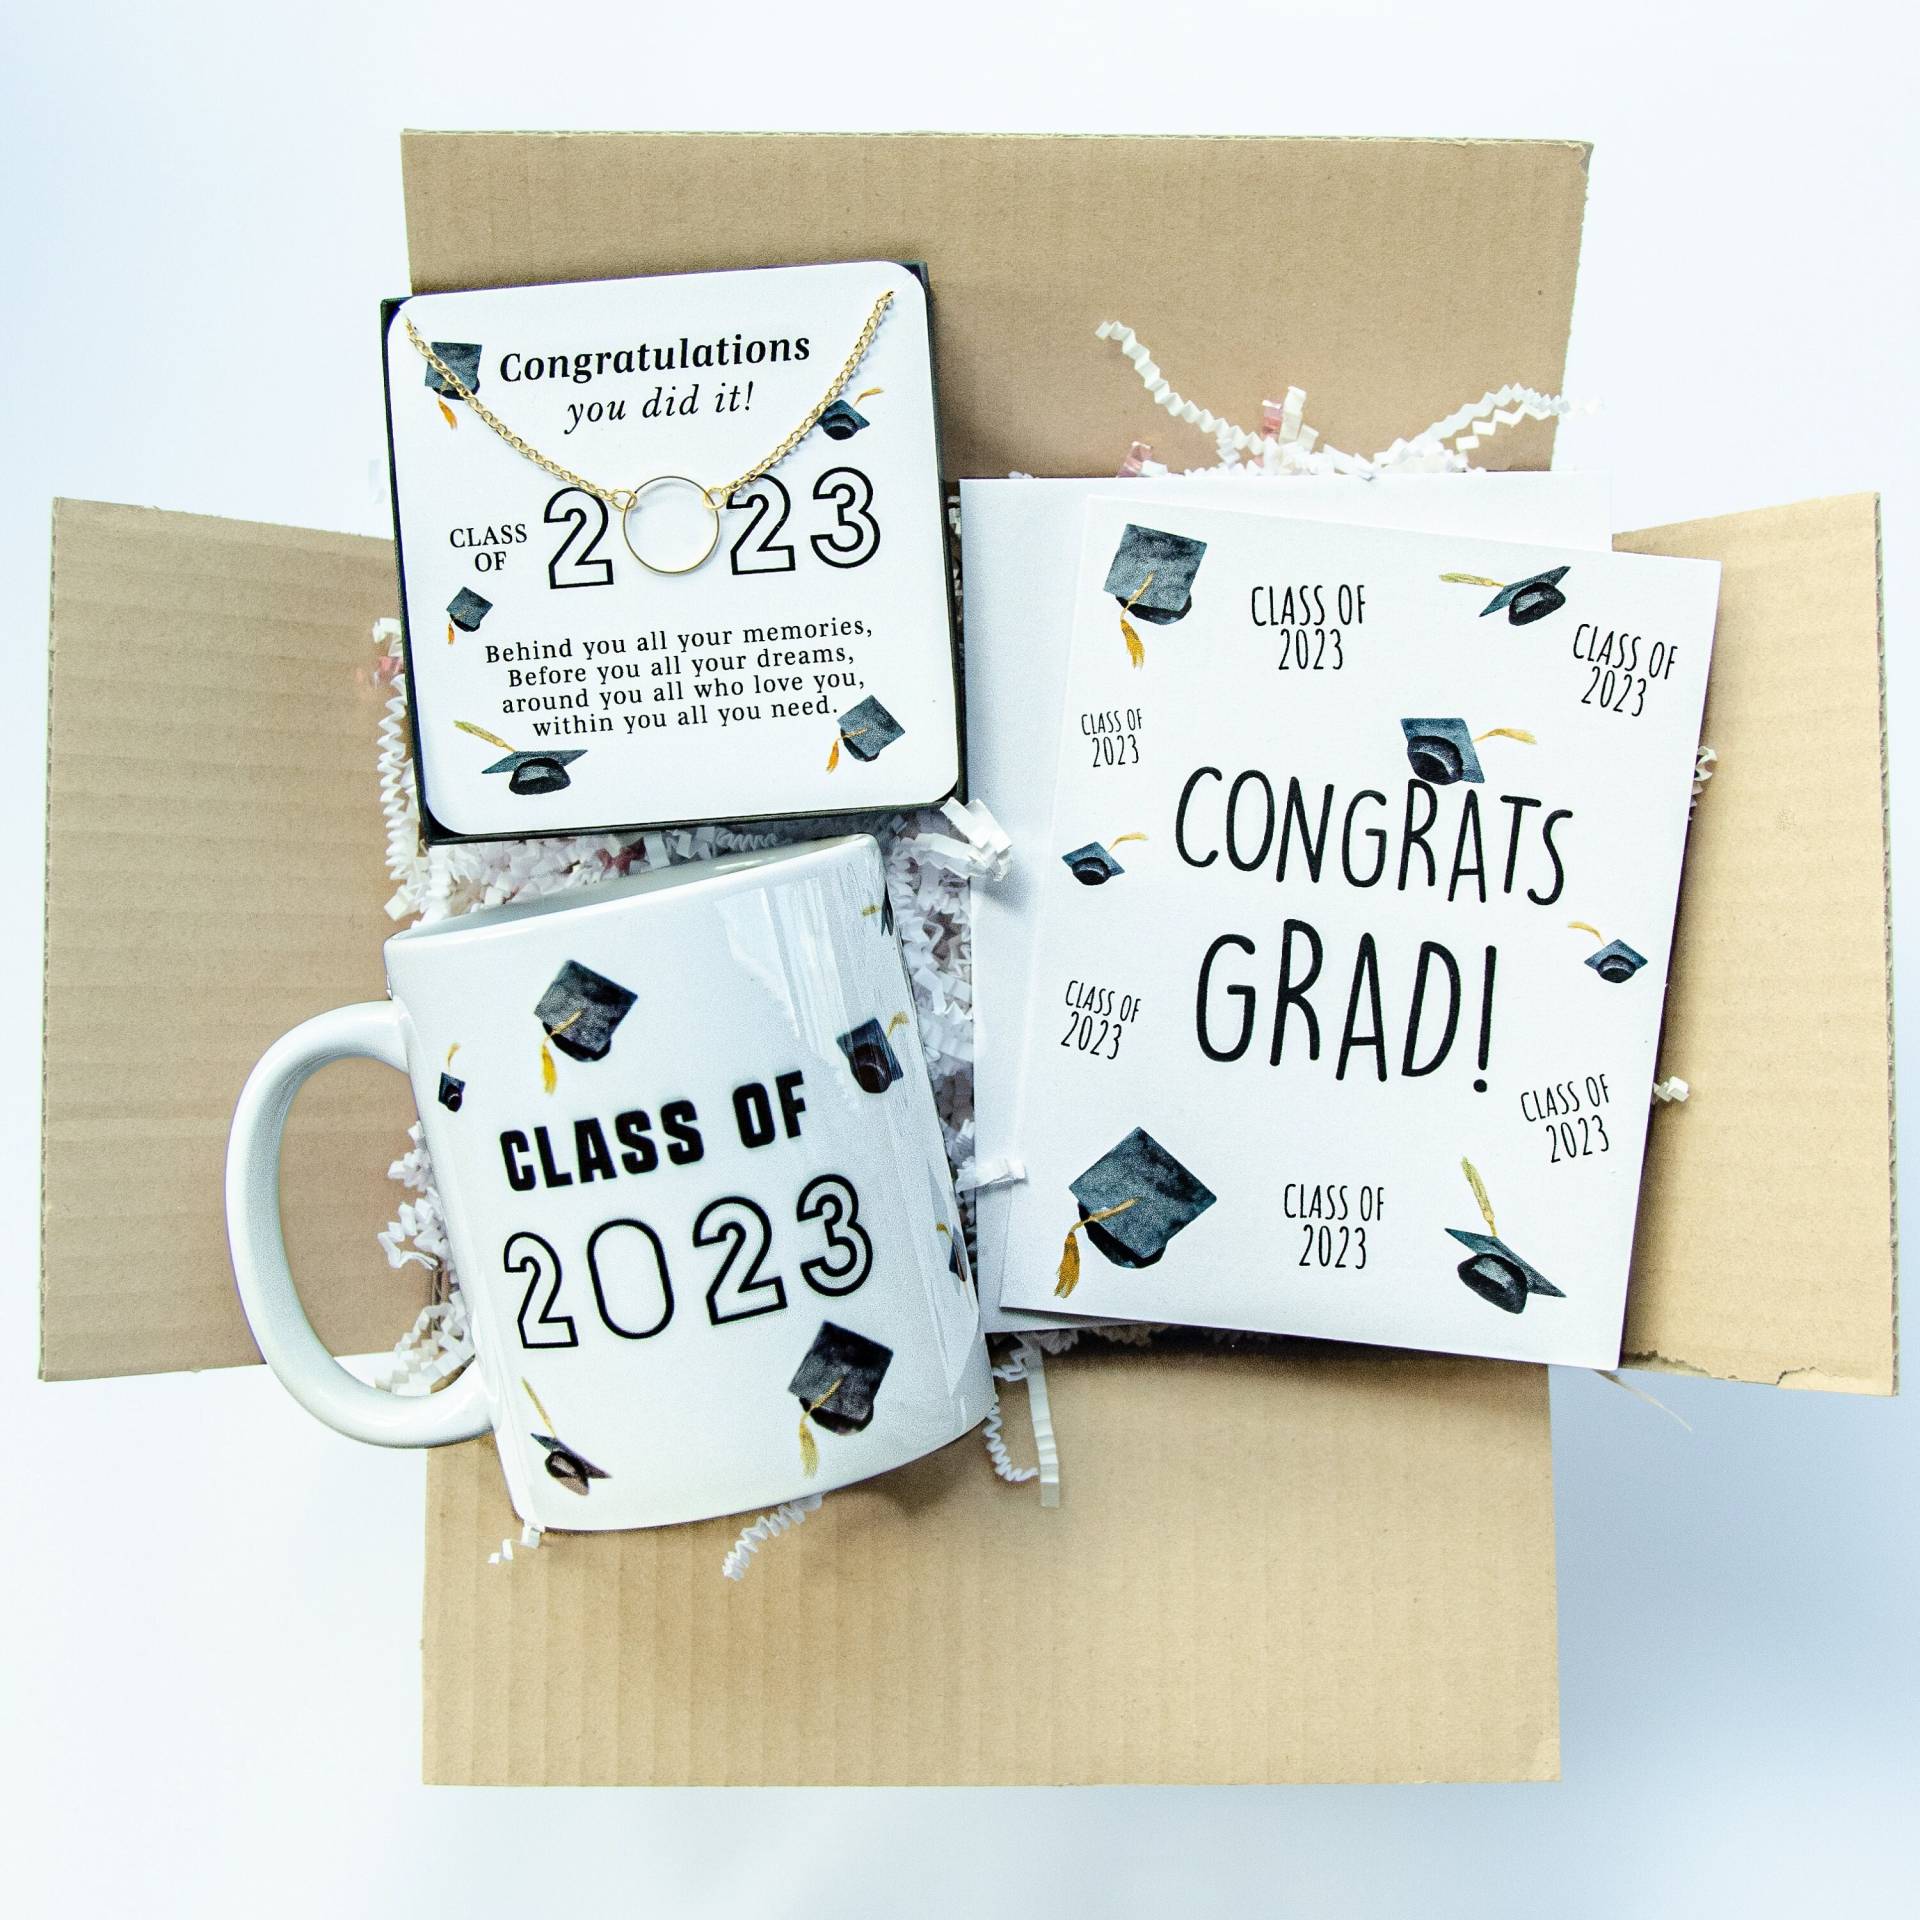 2023 Graduierten Geschenkbox, 14K Gold Halskette Graduierten, 2023 Congrats Grad Abschlusskarte, Geschenk Zum Abschluss, Abschlussgeschenkbox von TheJewelryBx21